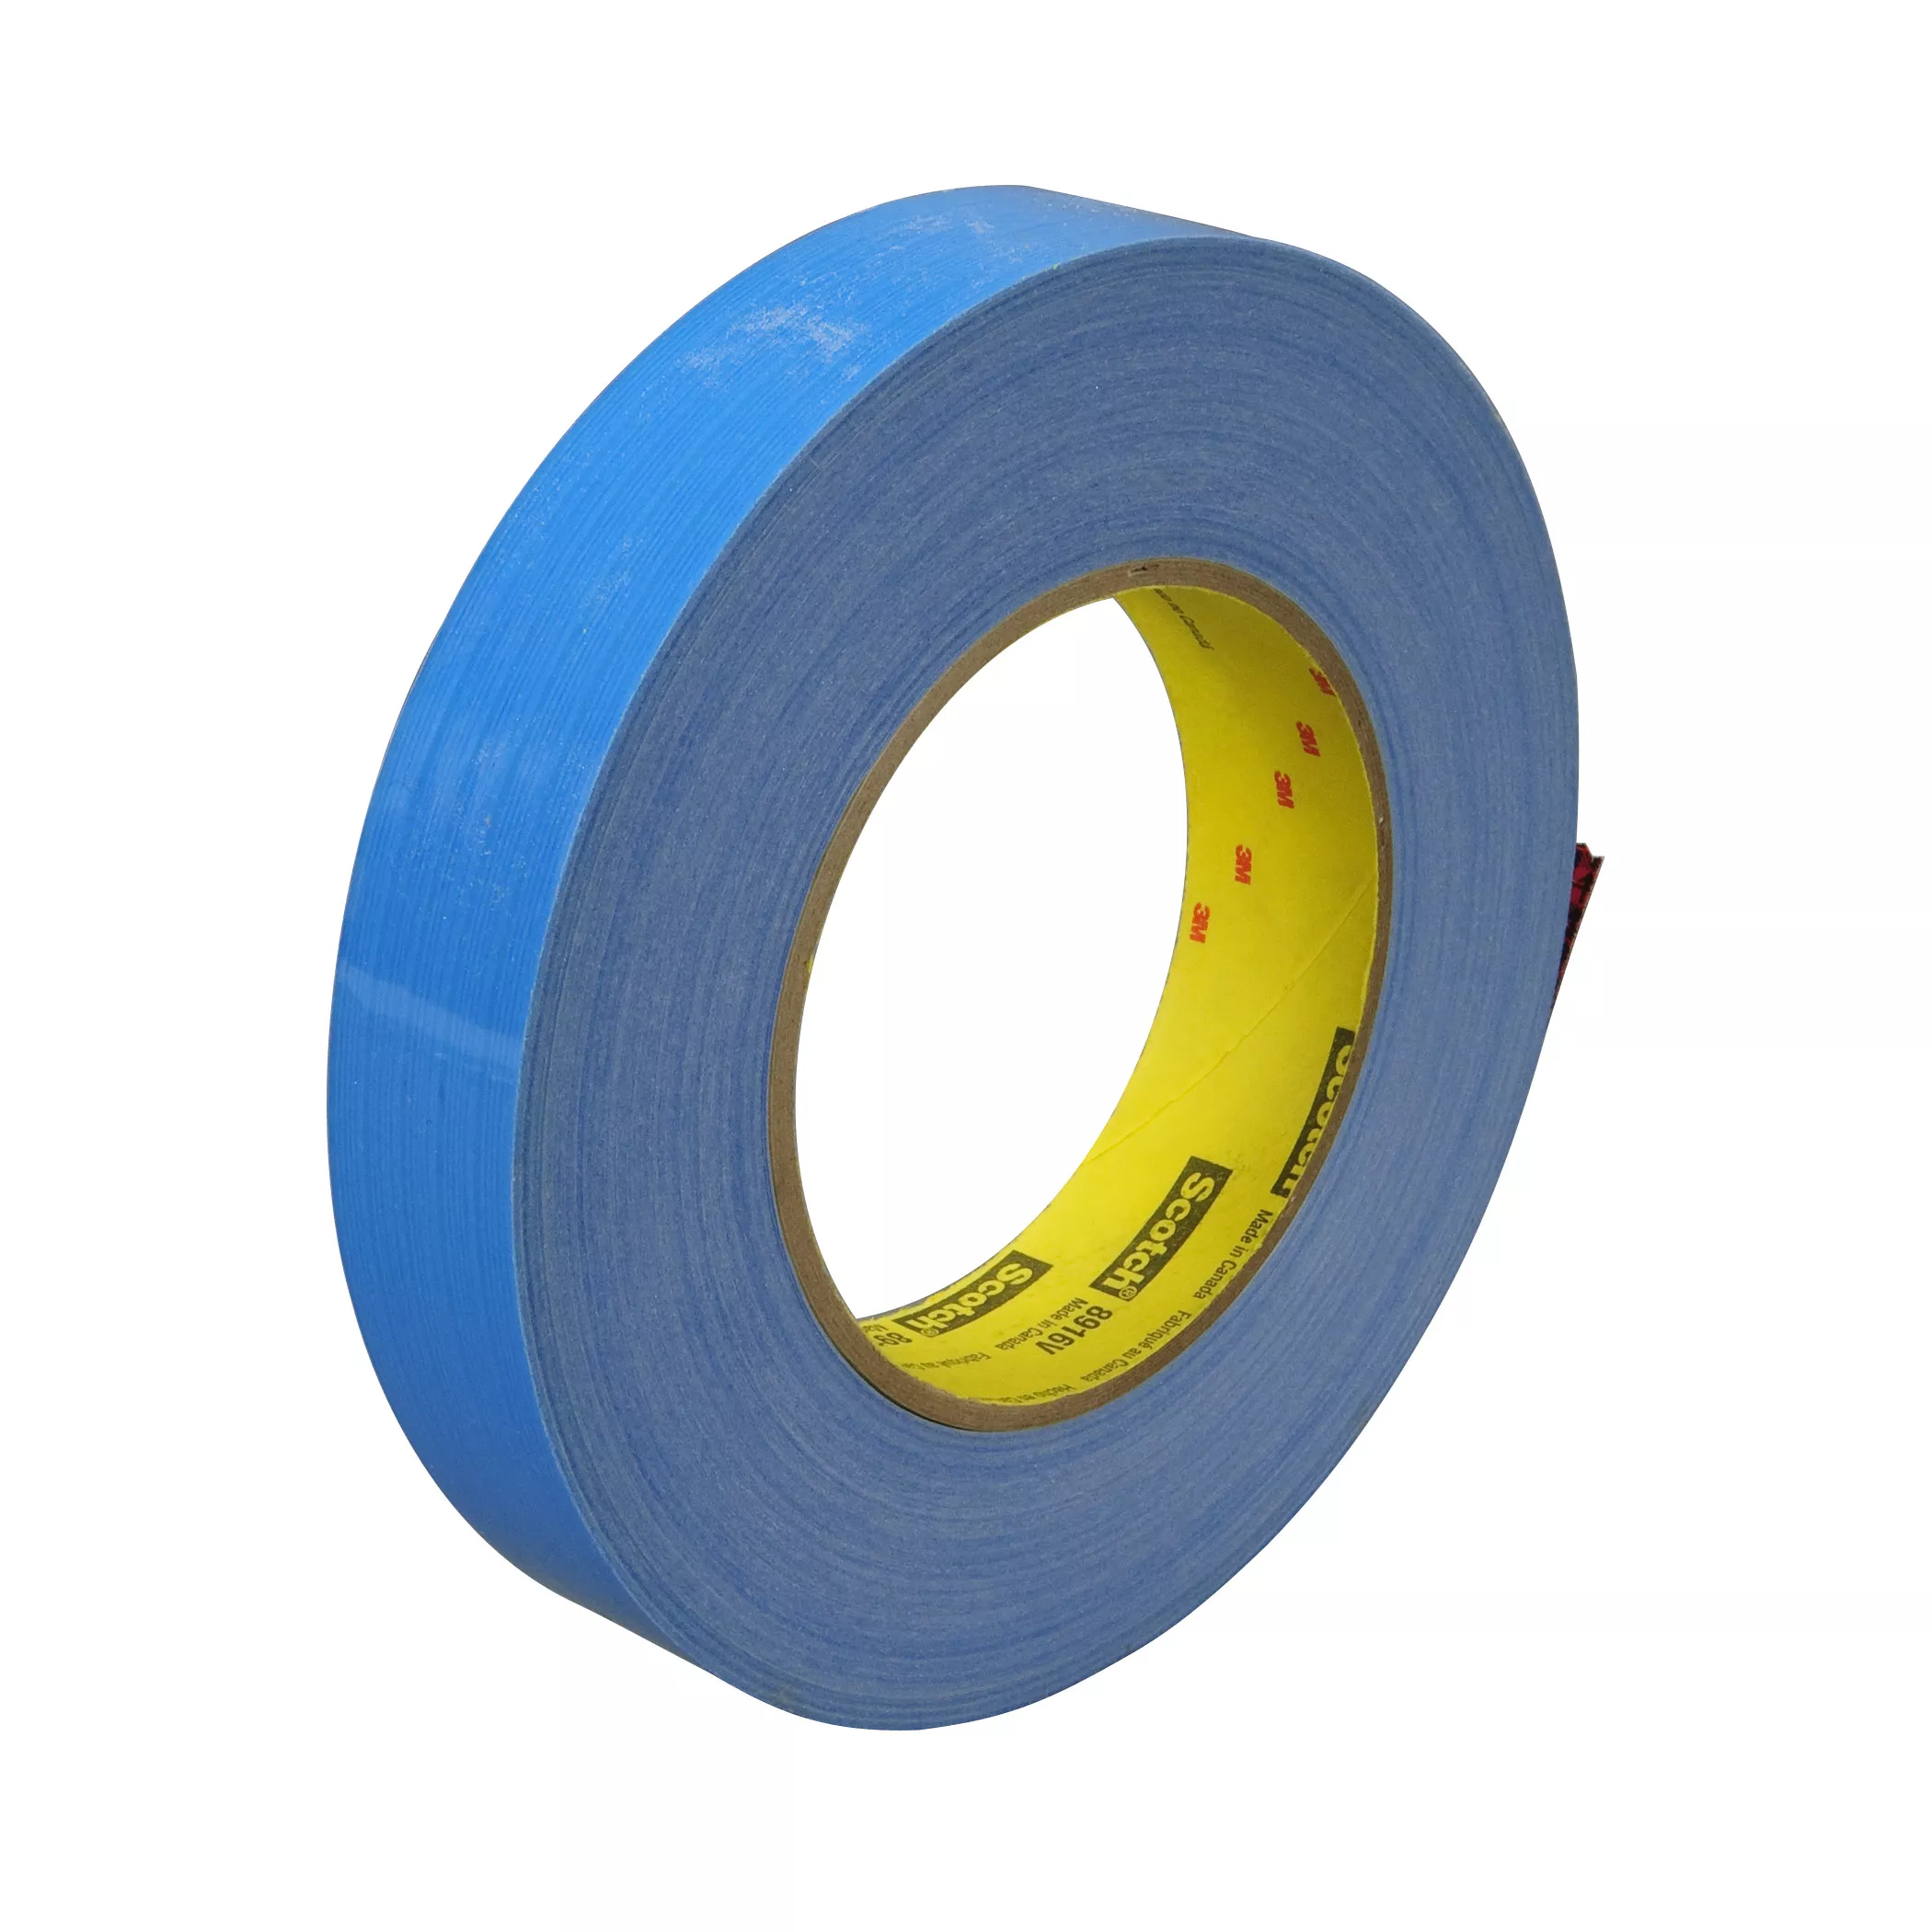 Scotch® Filament Tape 8916V, Blue, 18 mm x 55 m, 6.8 mil, 6.8 mil, 48
Roll/Case